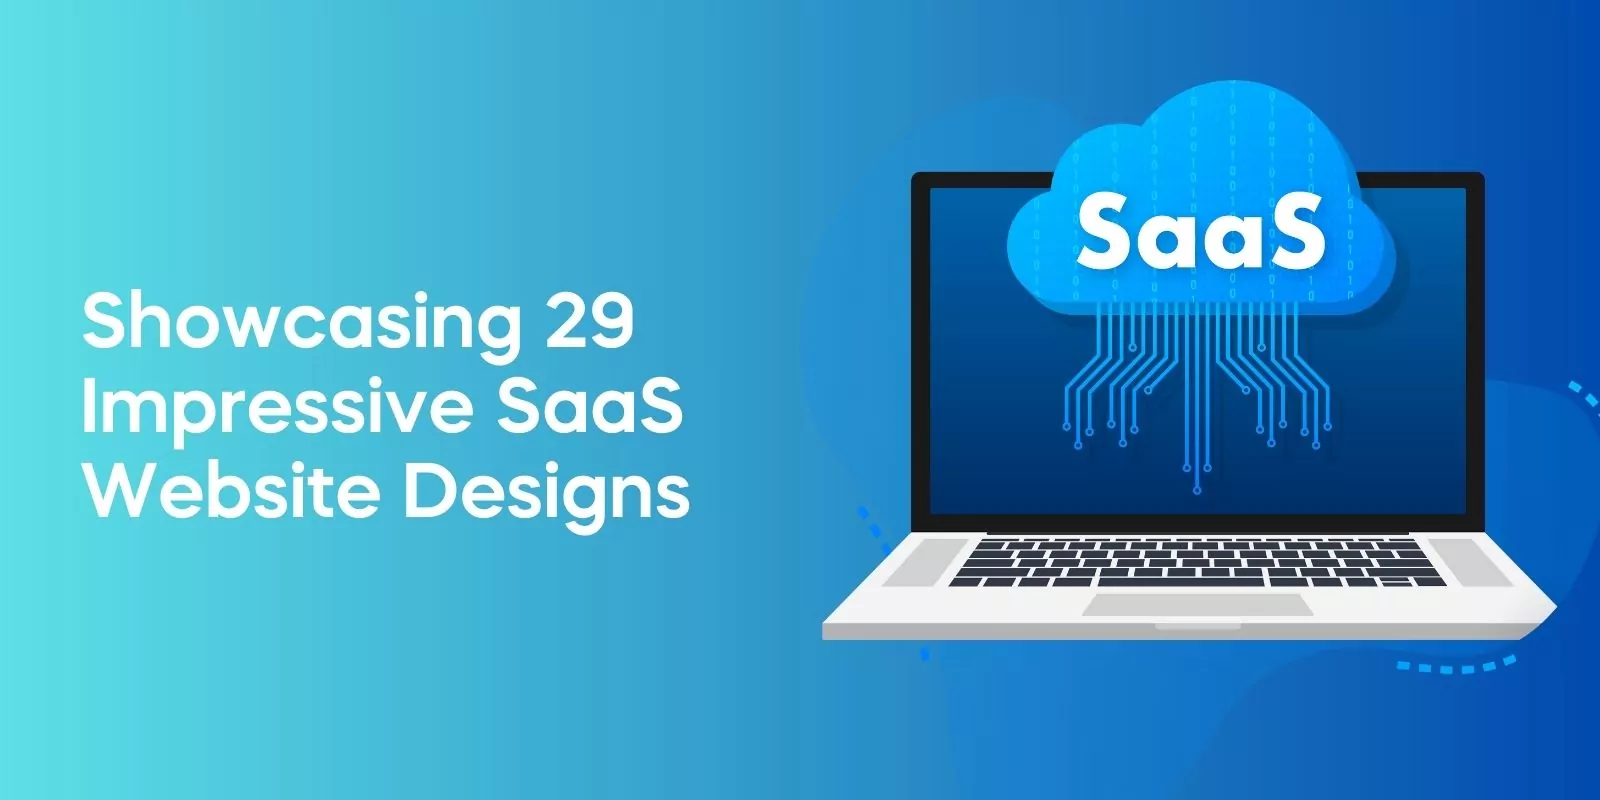 Showcasing 29 Impressive SaaS Website Designs